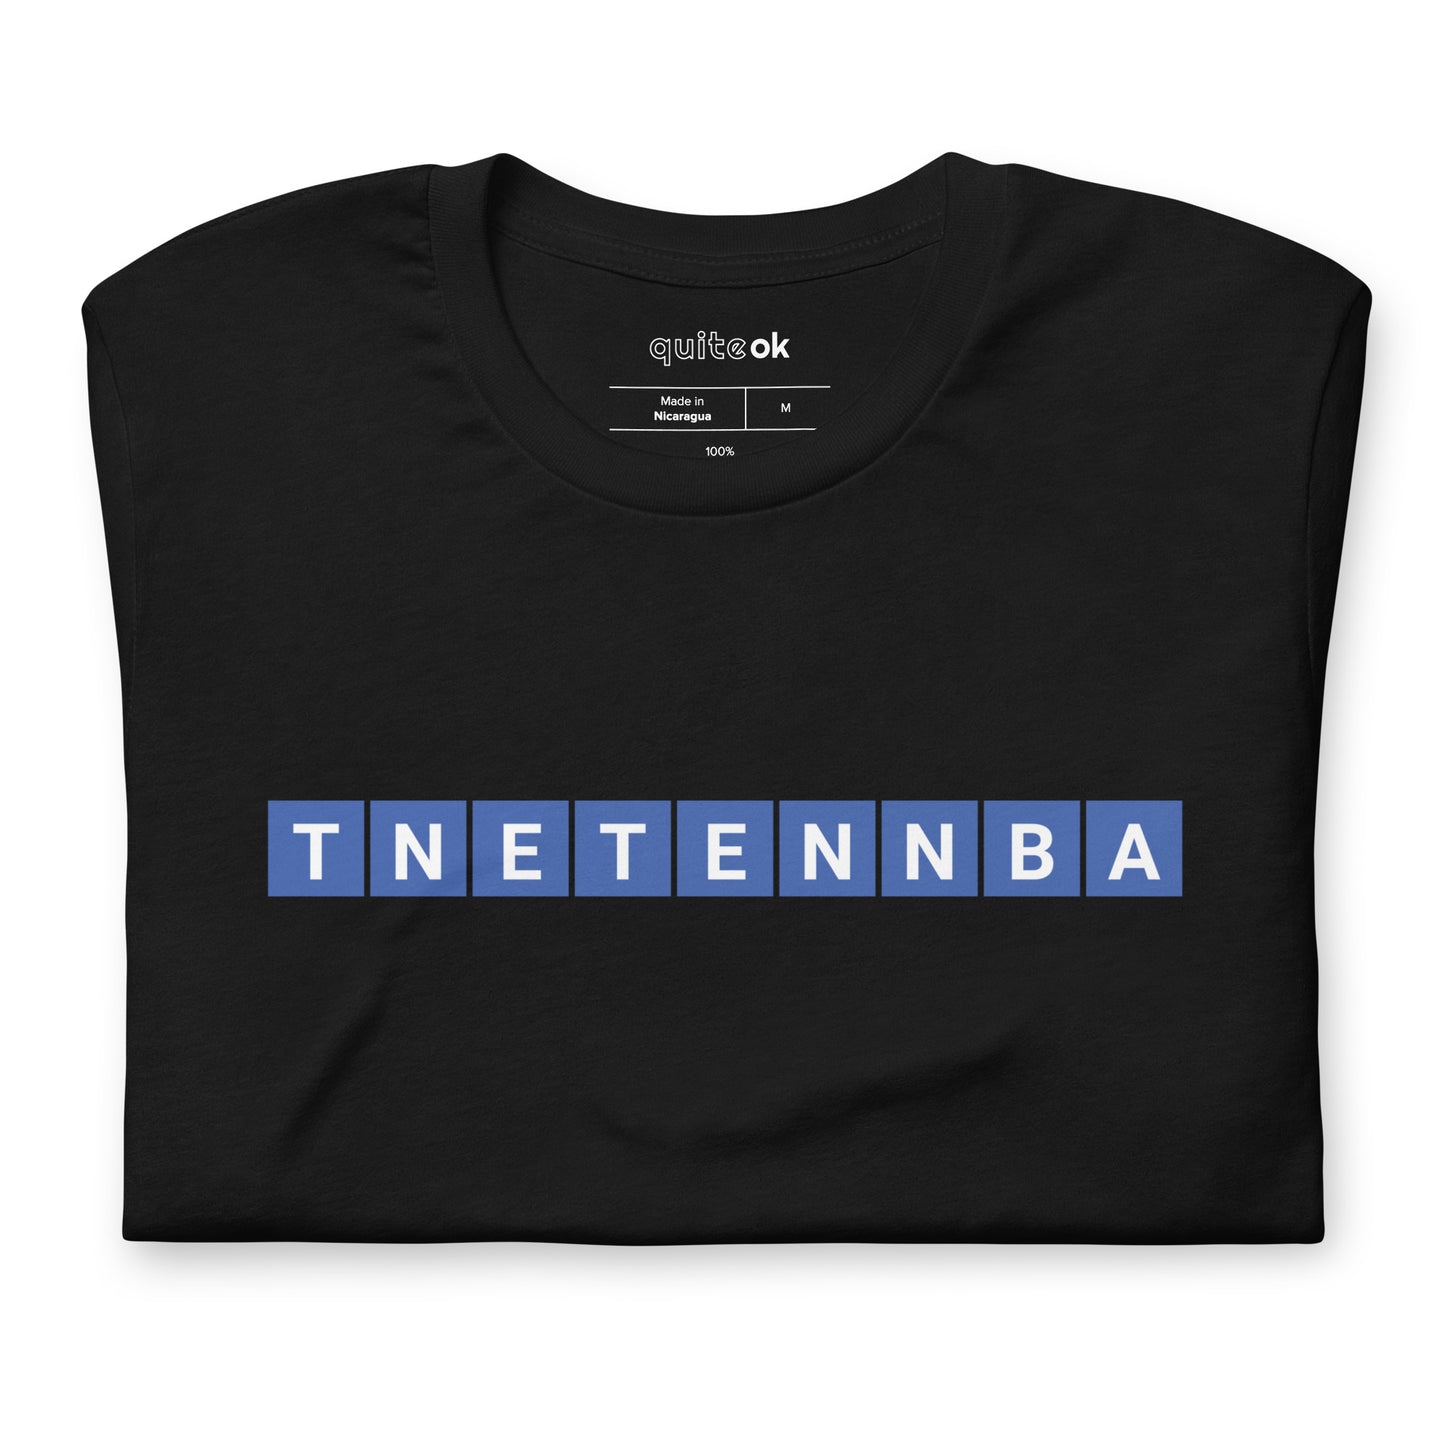 TNETENNBA Comedy T-Shirt